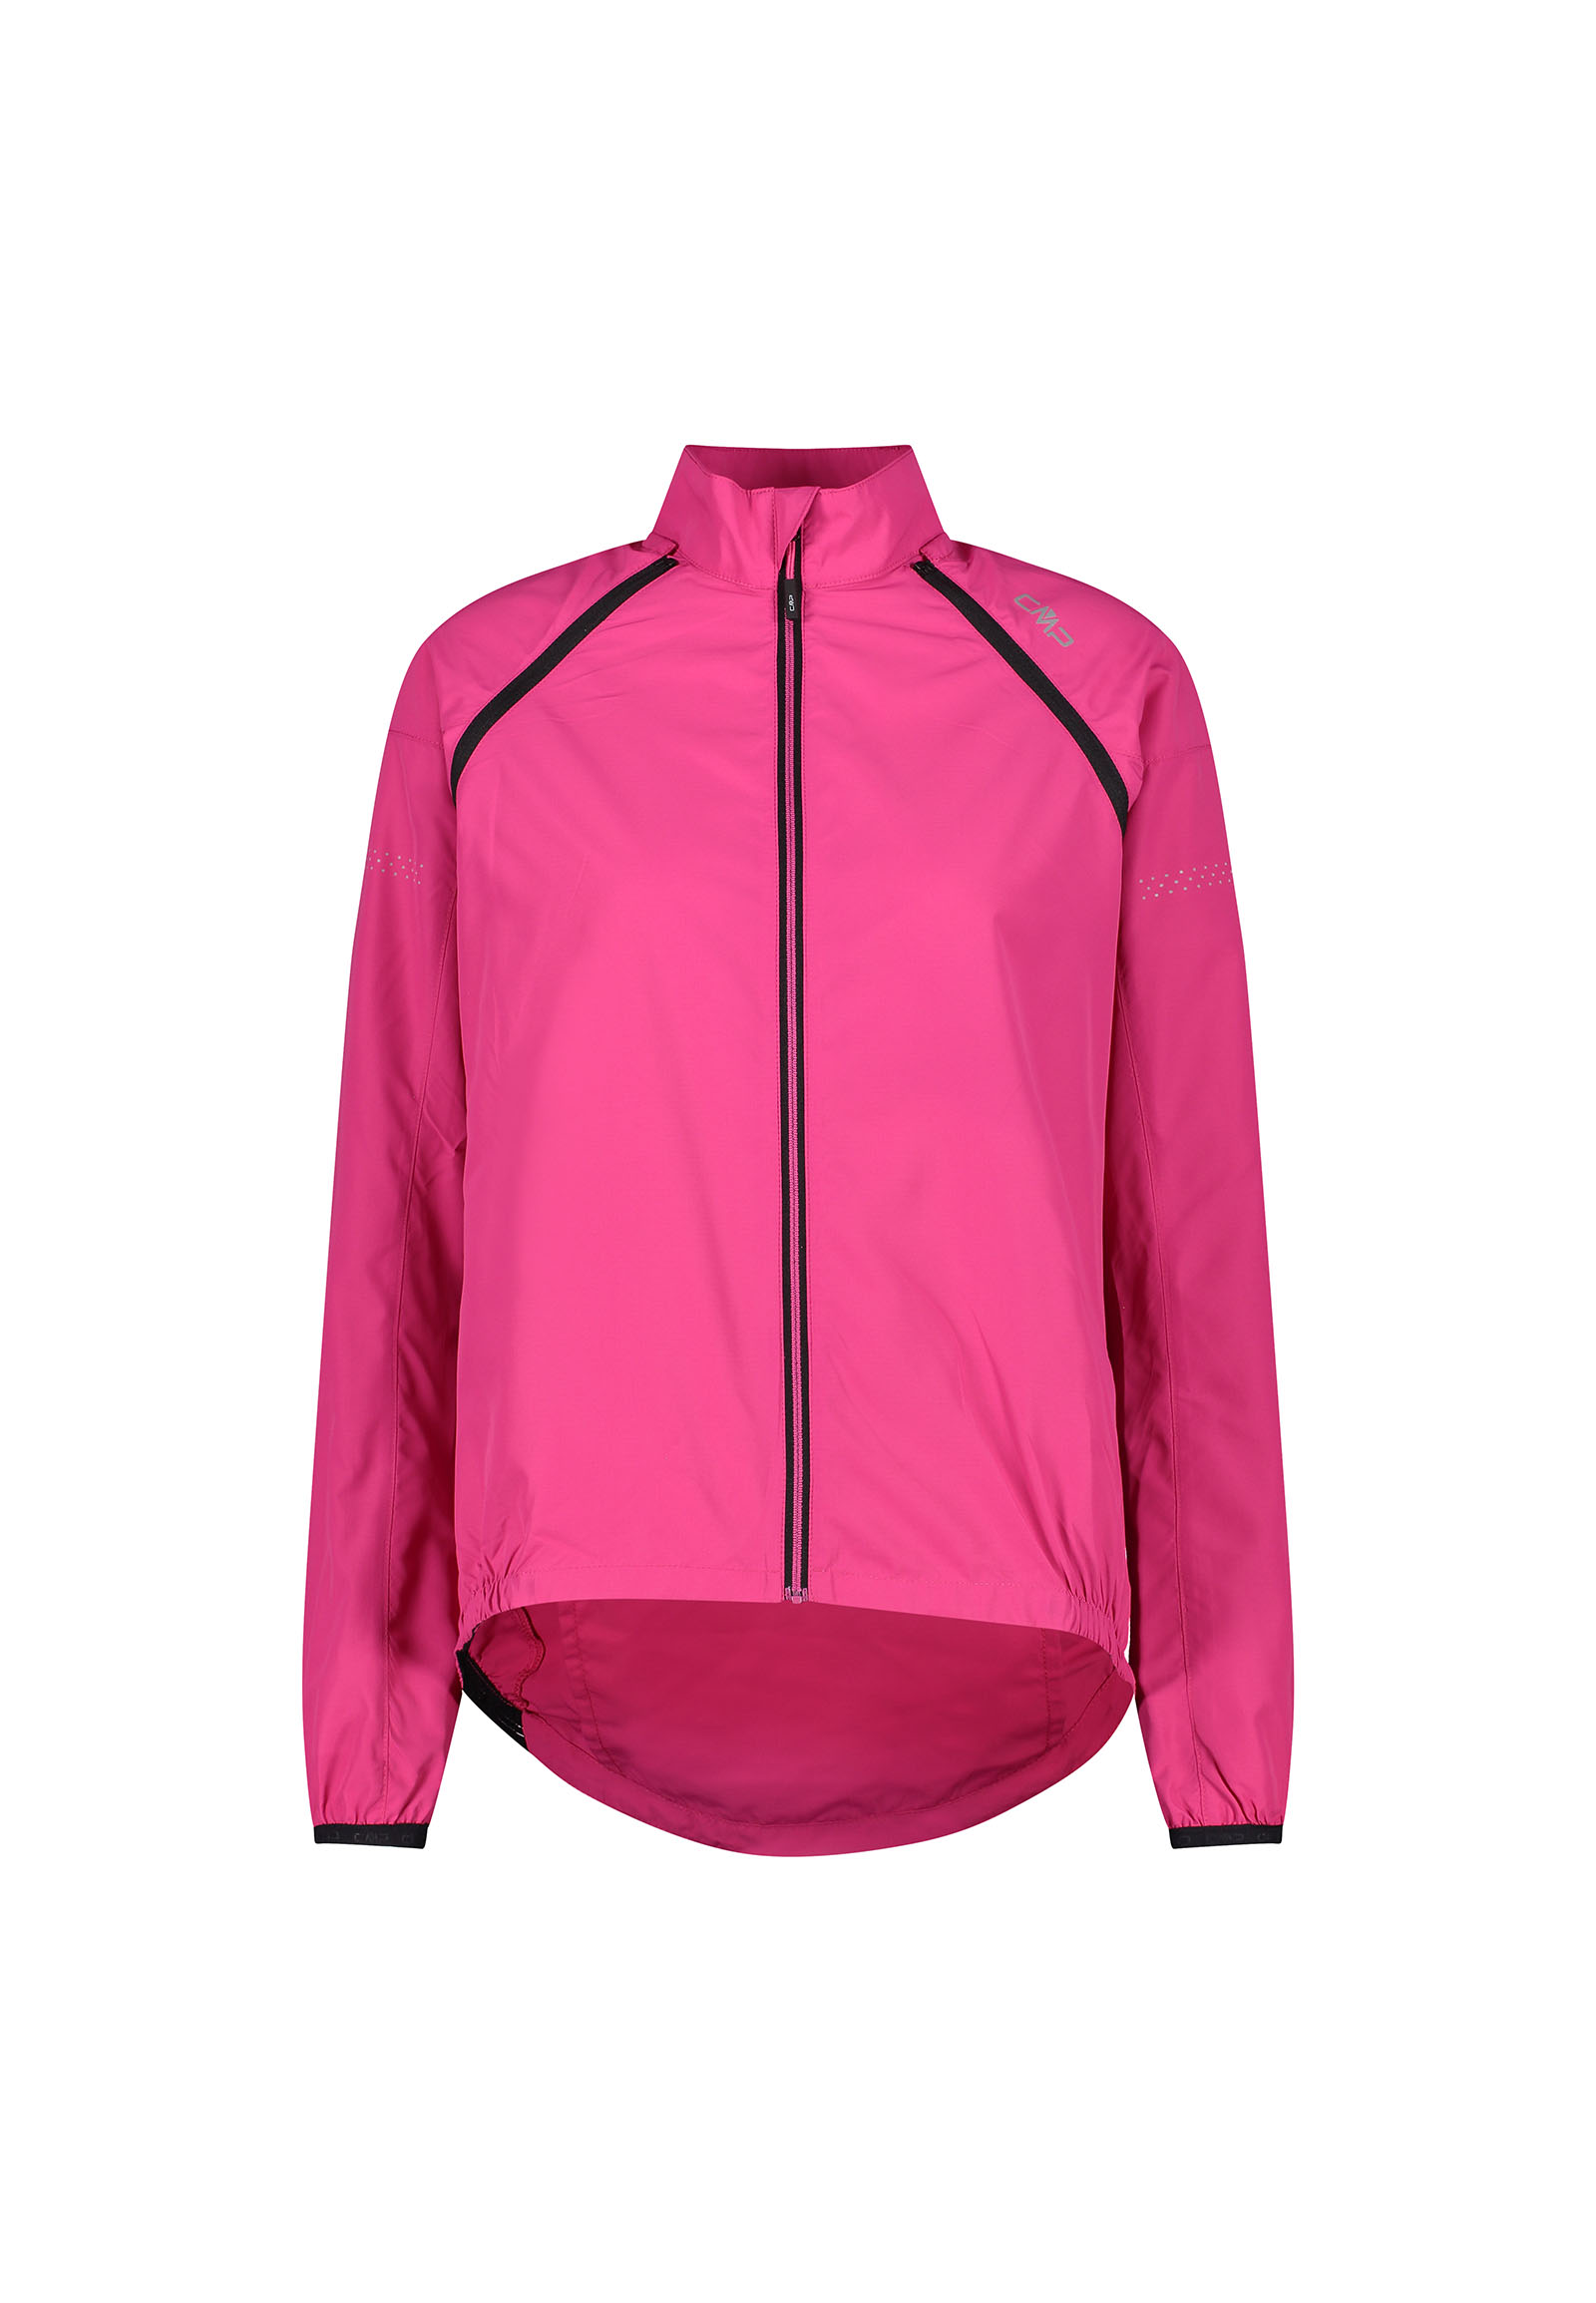 CMP Damen Windschutzjacke mit abnehmbaren Ärmeln 32C6136 pink